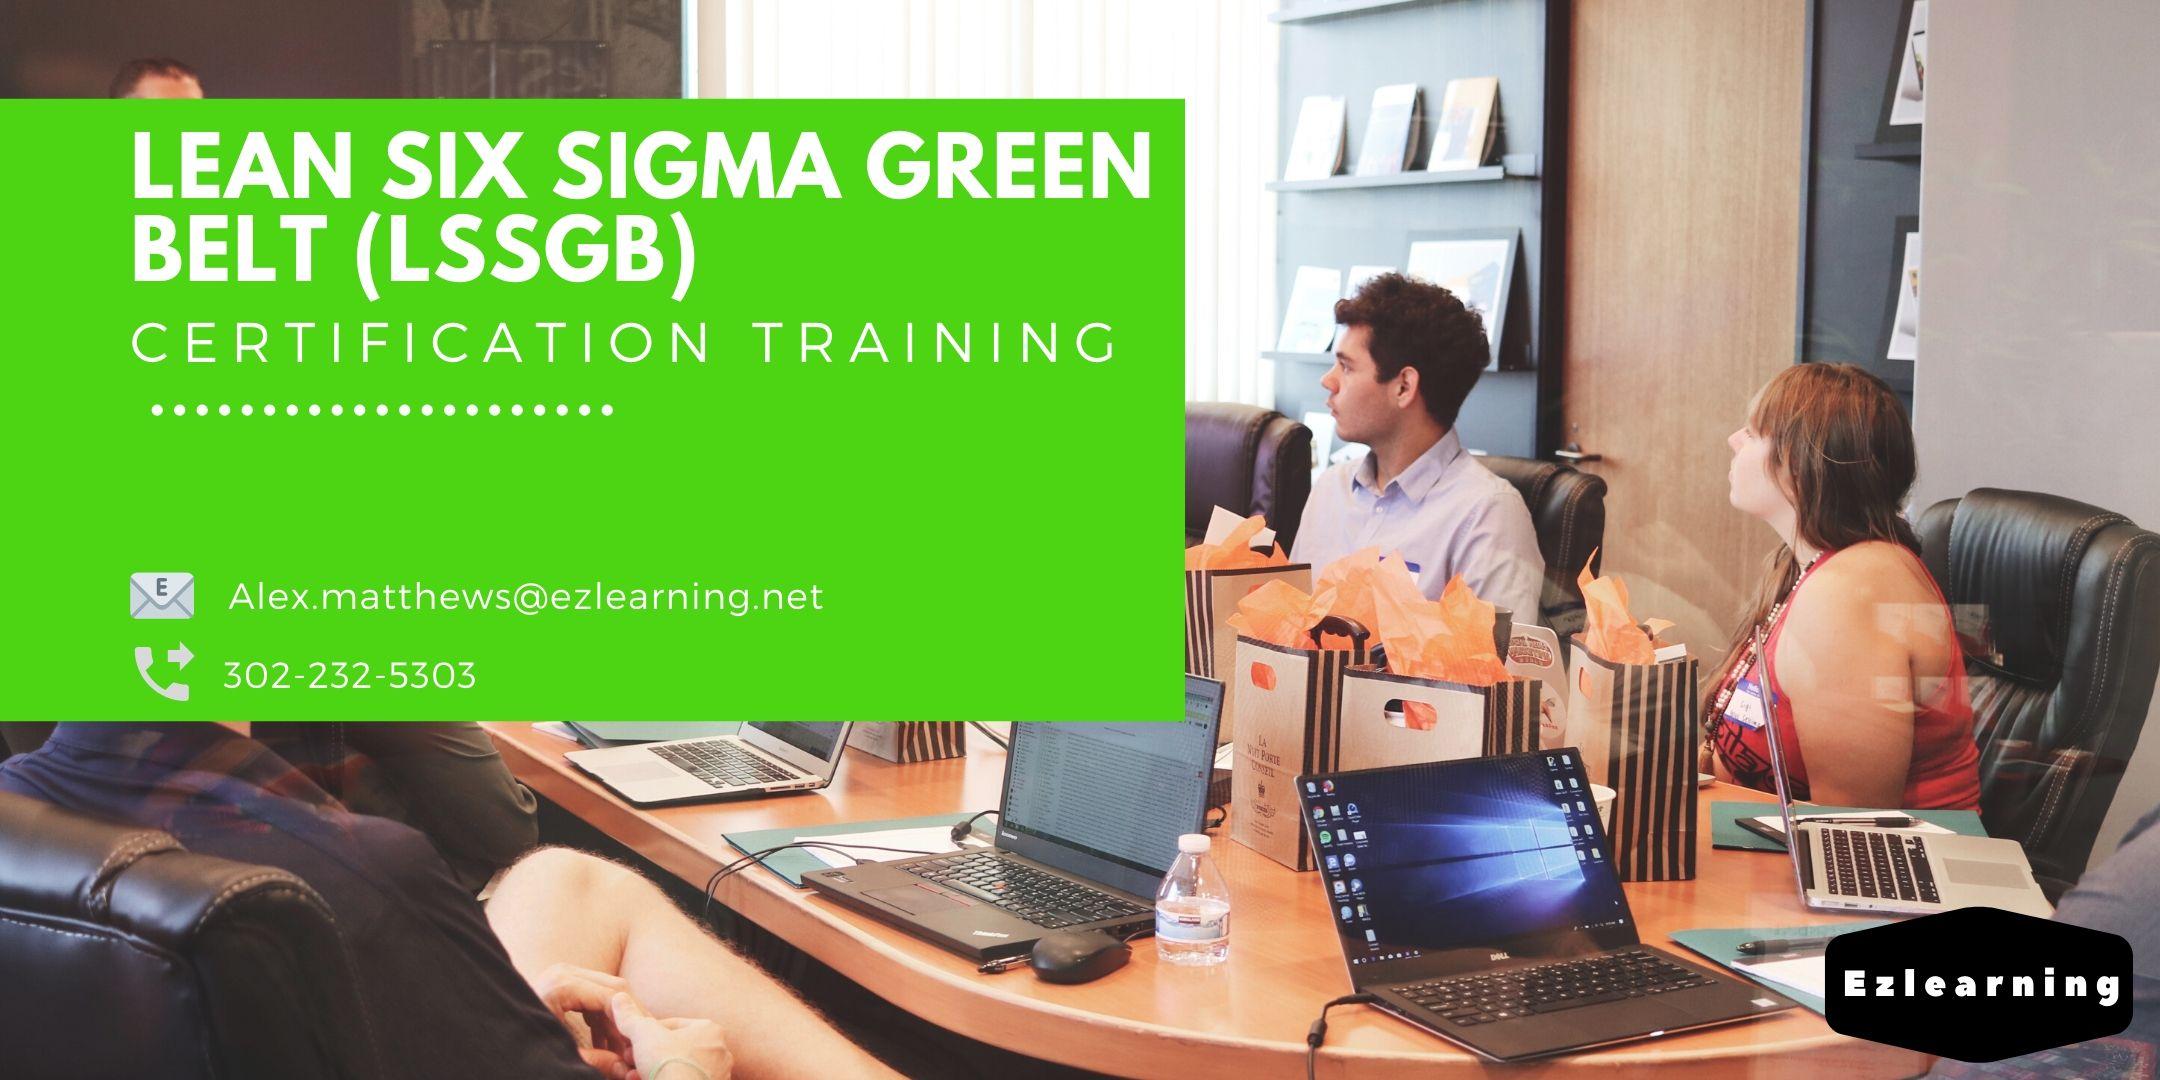 Lean Six Sigma Green Belt Certification Training in Anchorage, AK